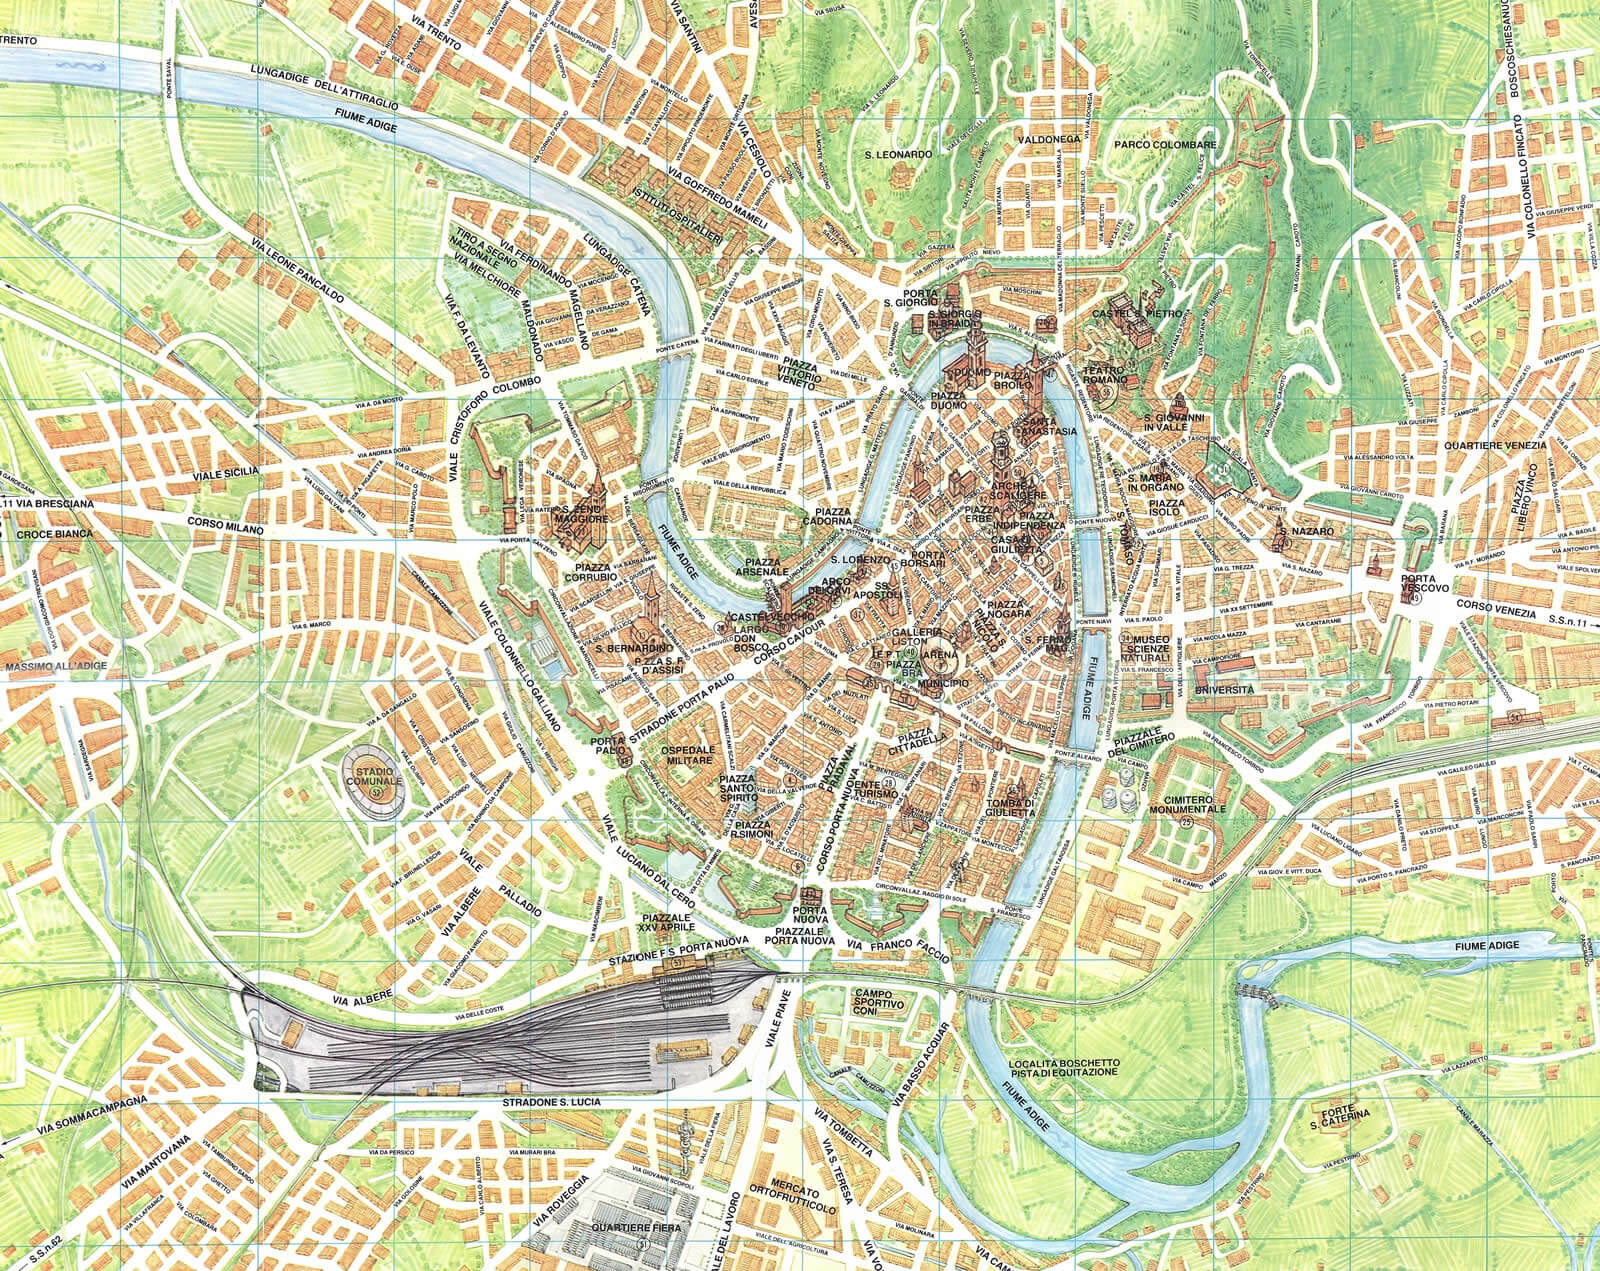 Verona touristique plan